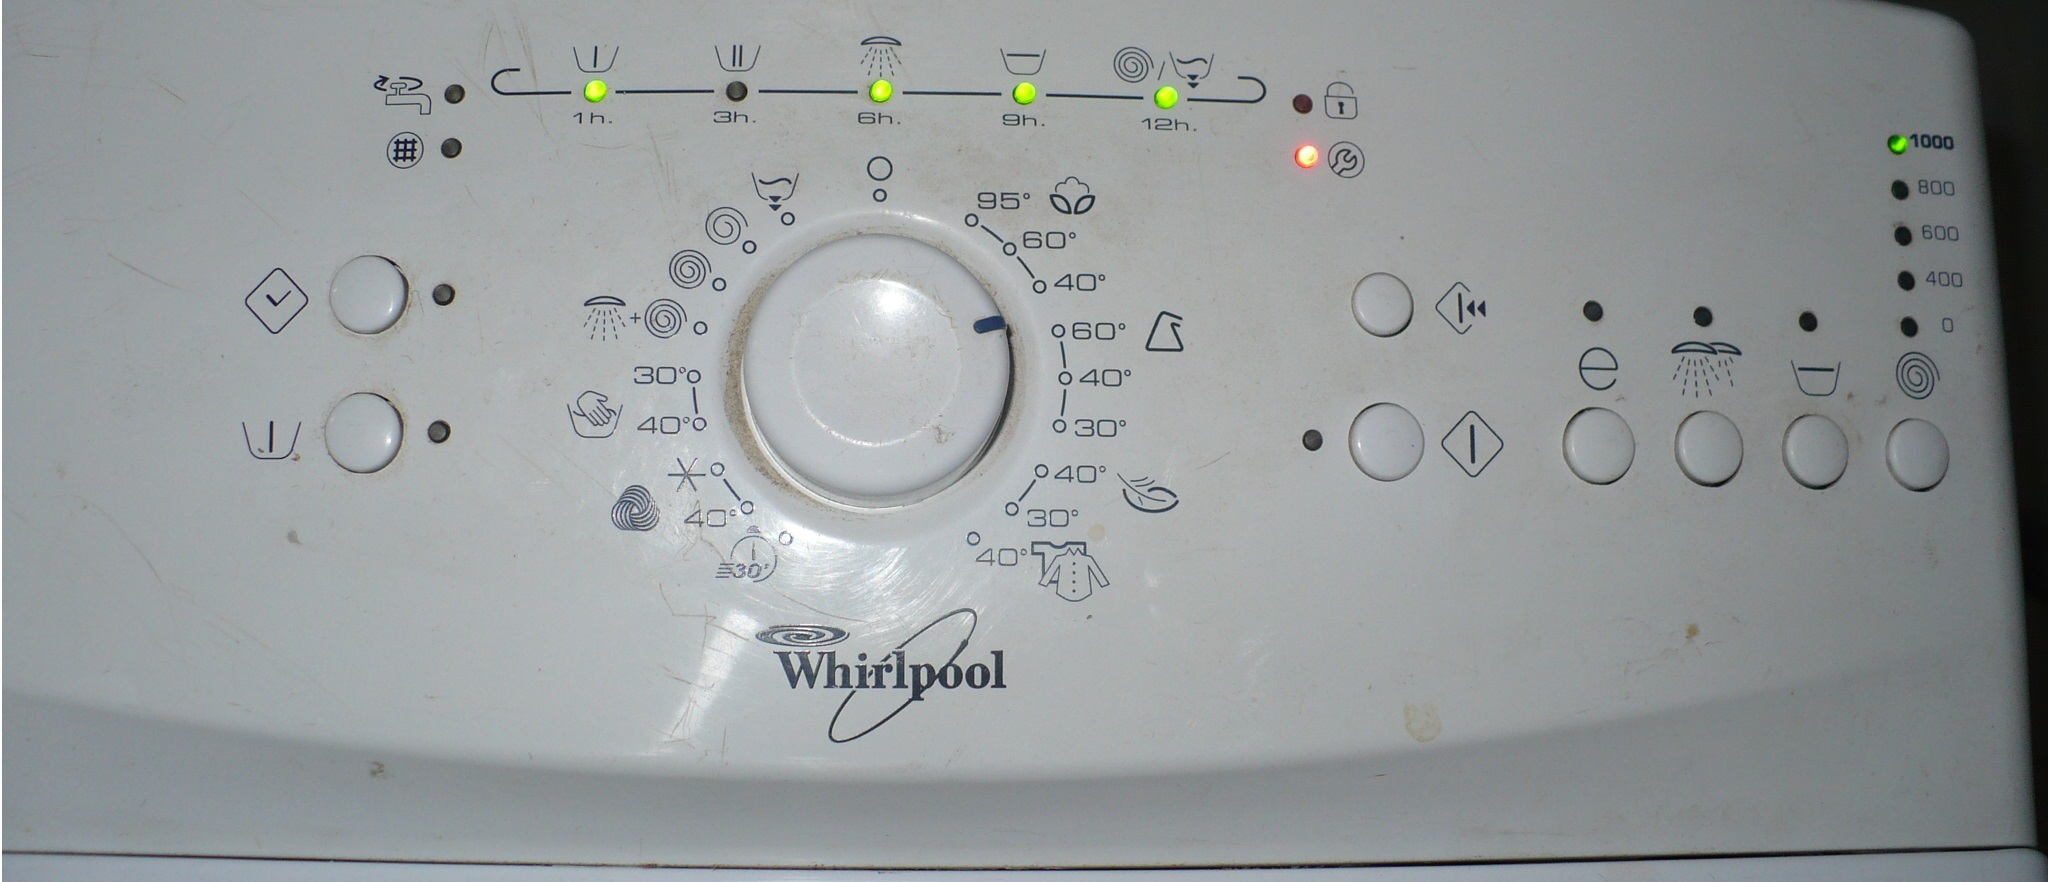 Whirlpool pomoćni programi